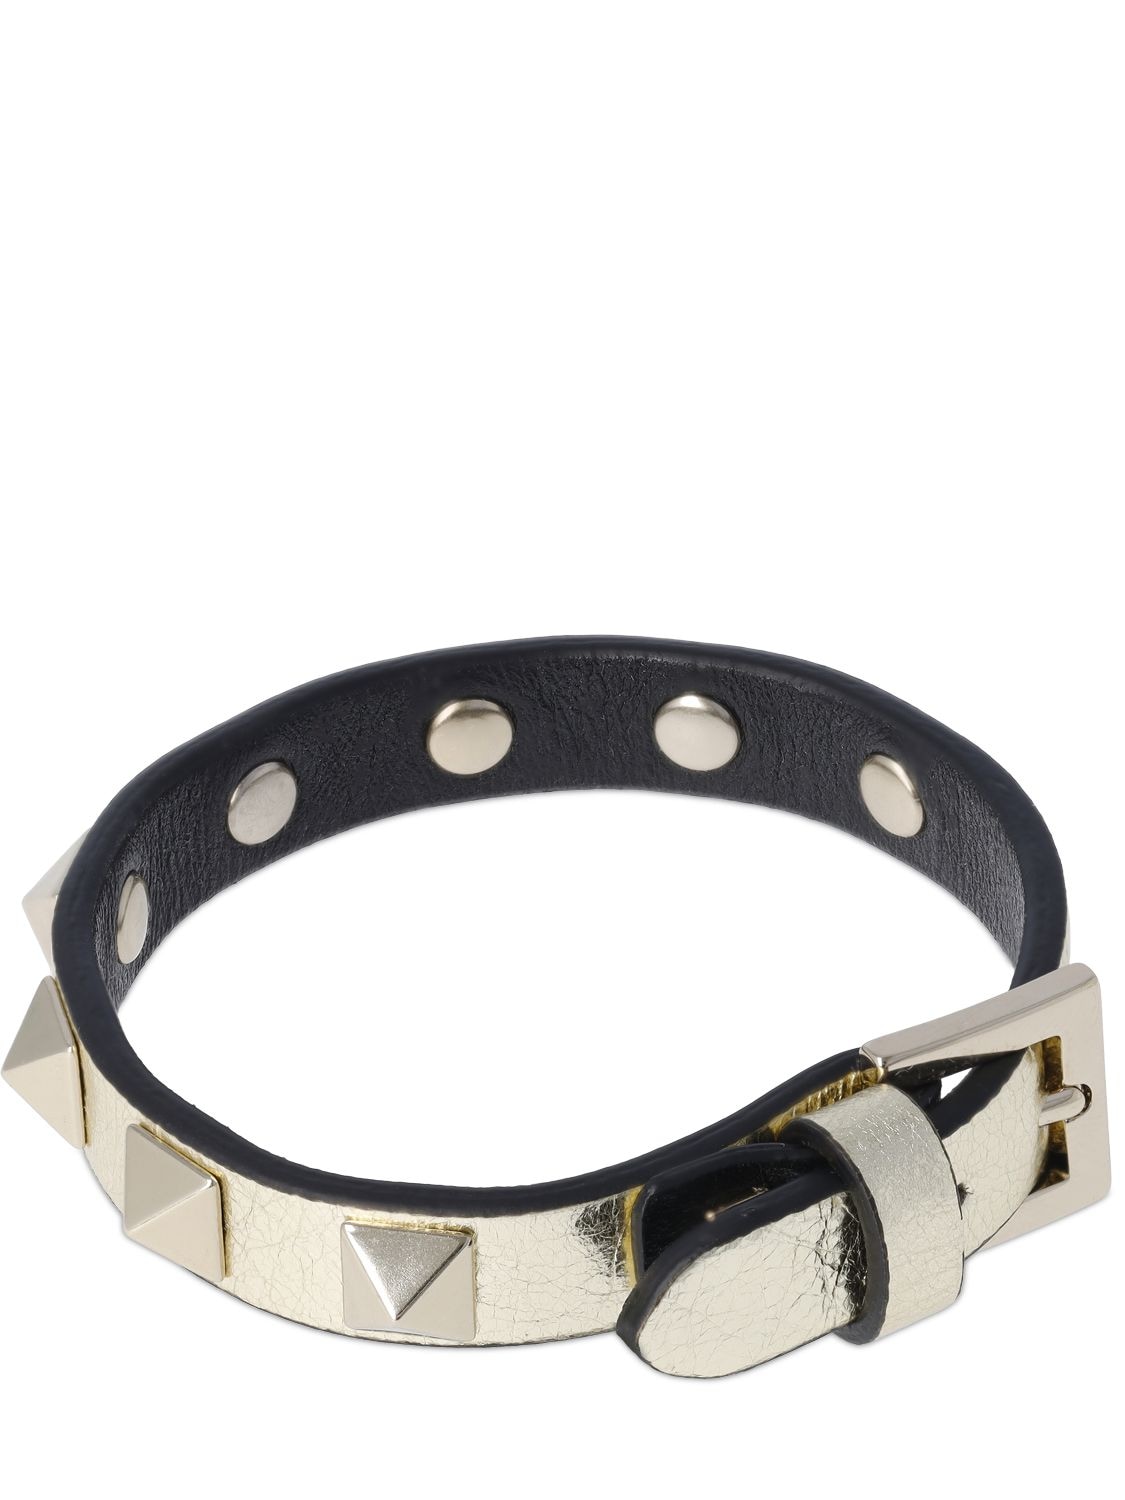 lokal effektiv Springboard Valentino Garavani Rockstud Lamé Leather Belt Bracelet In Platinum |  ModeSens